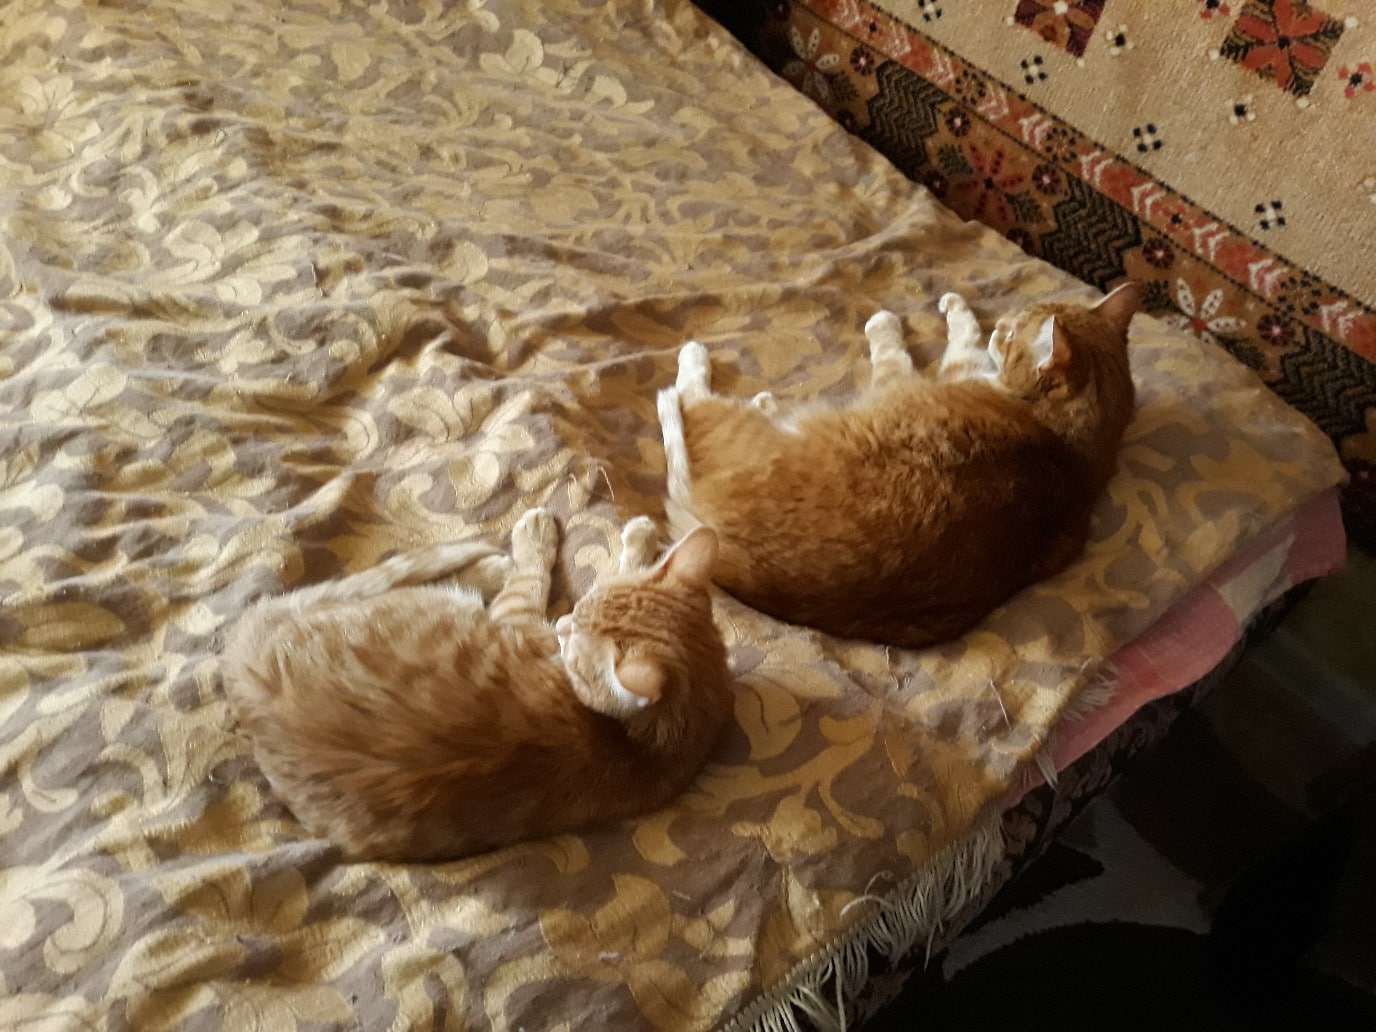 коты на кровати